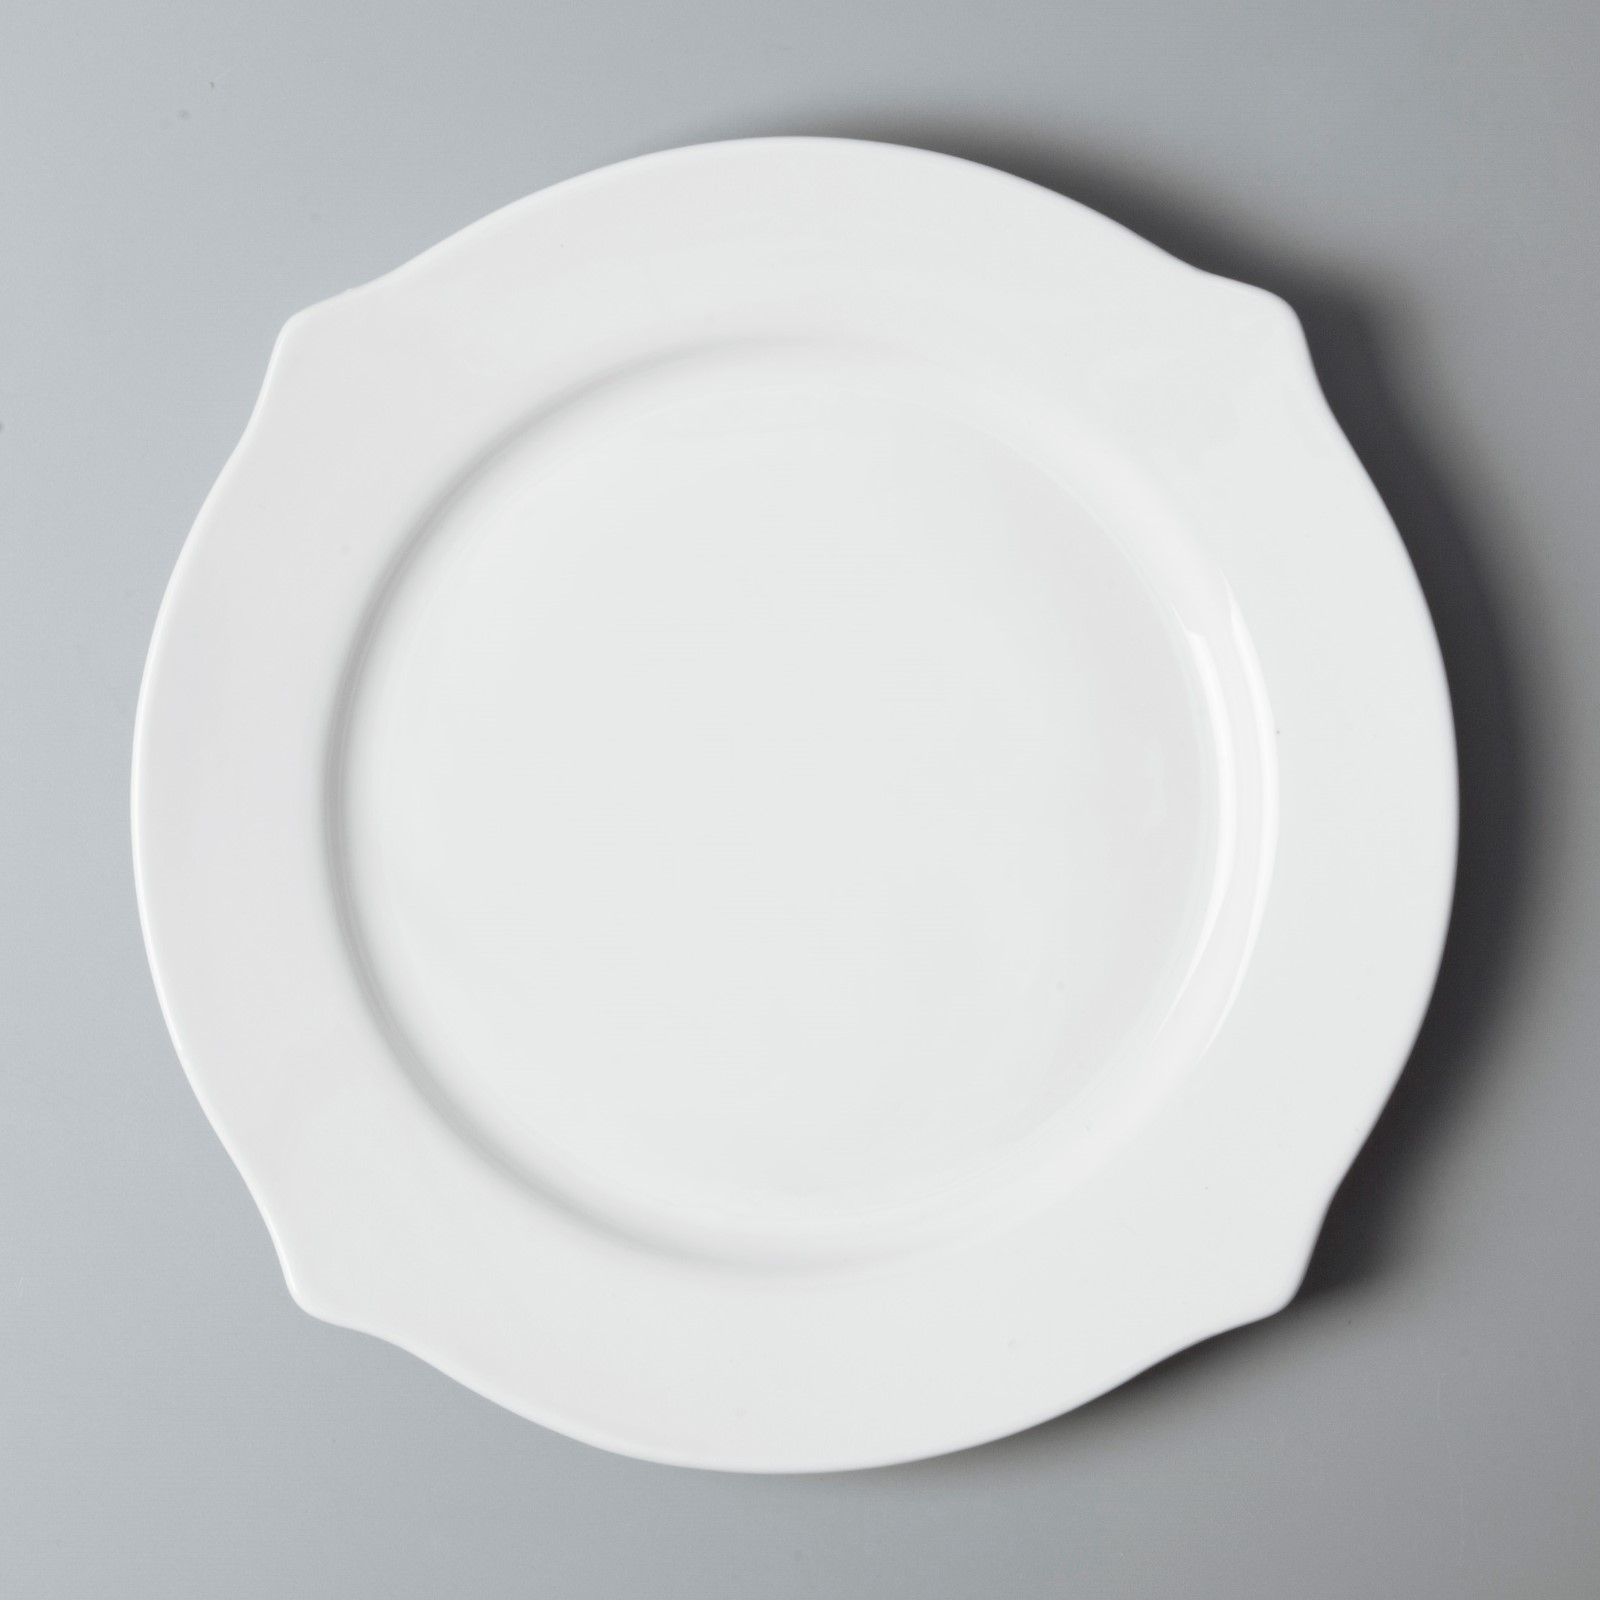 white porcelain tableware rim casual dinnerware Warranty Two Eight